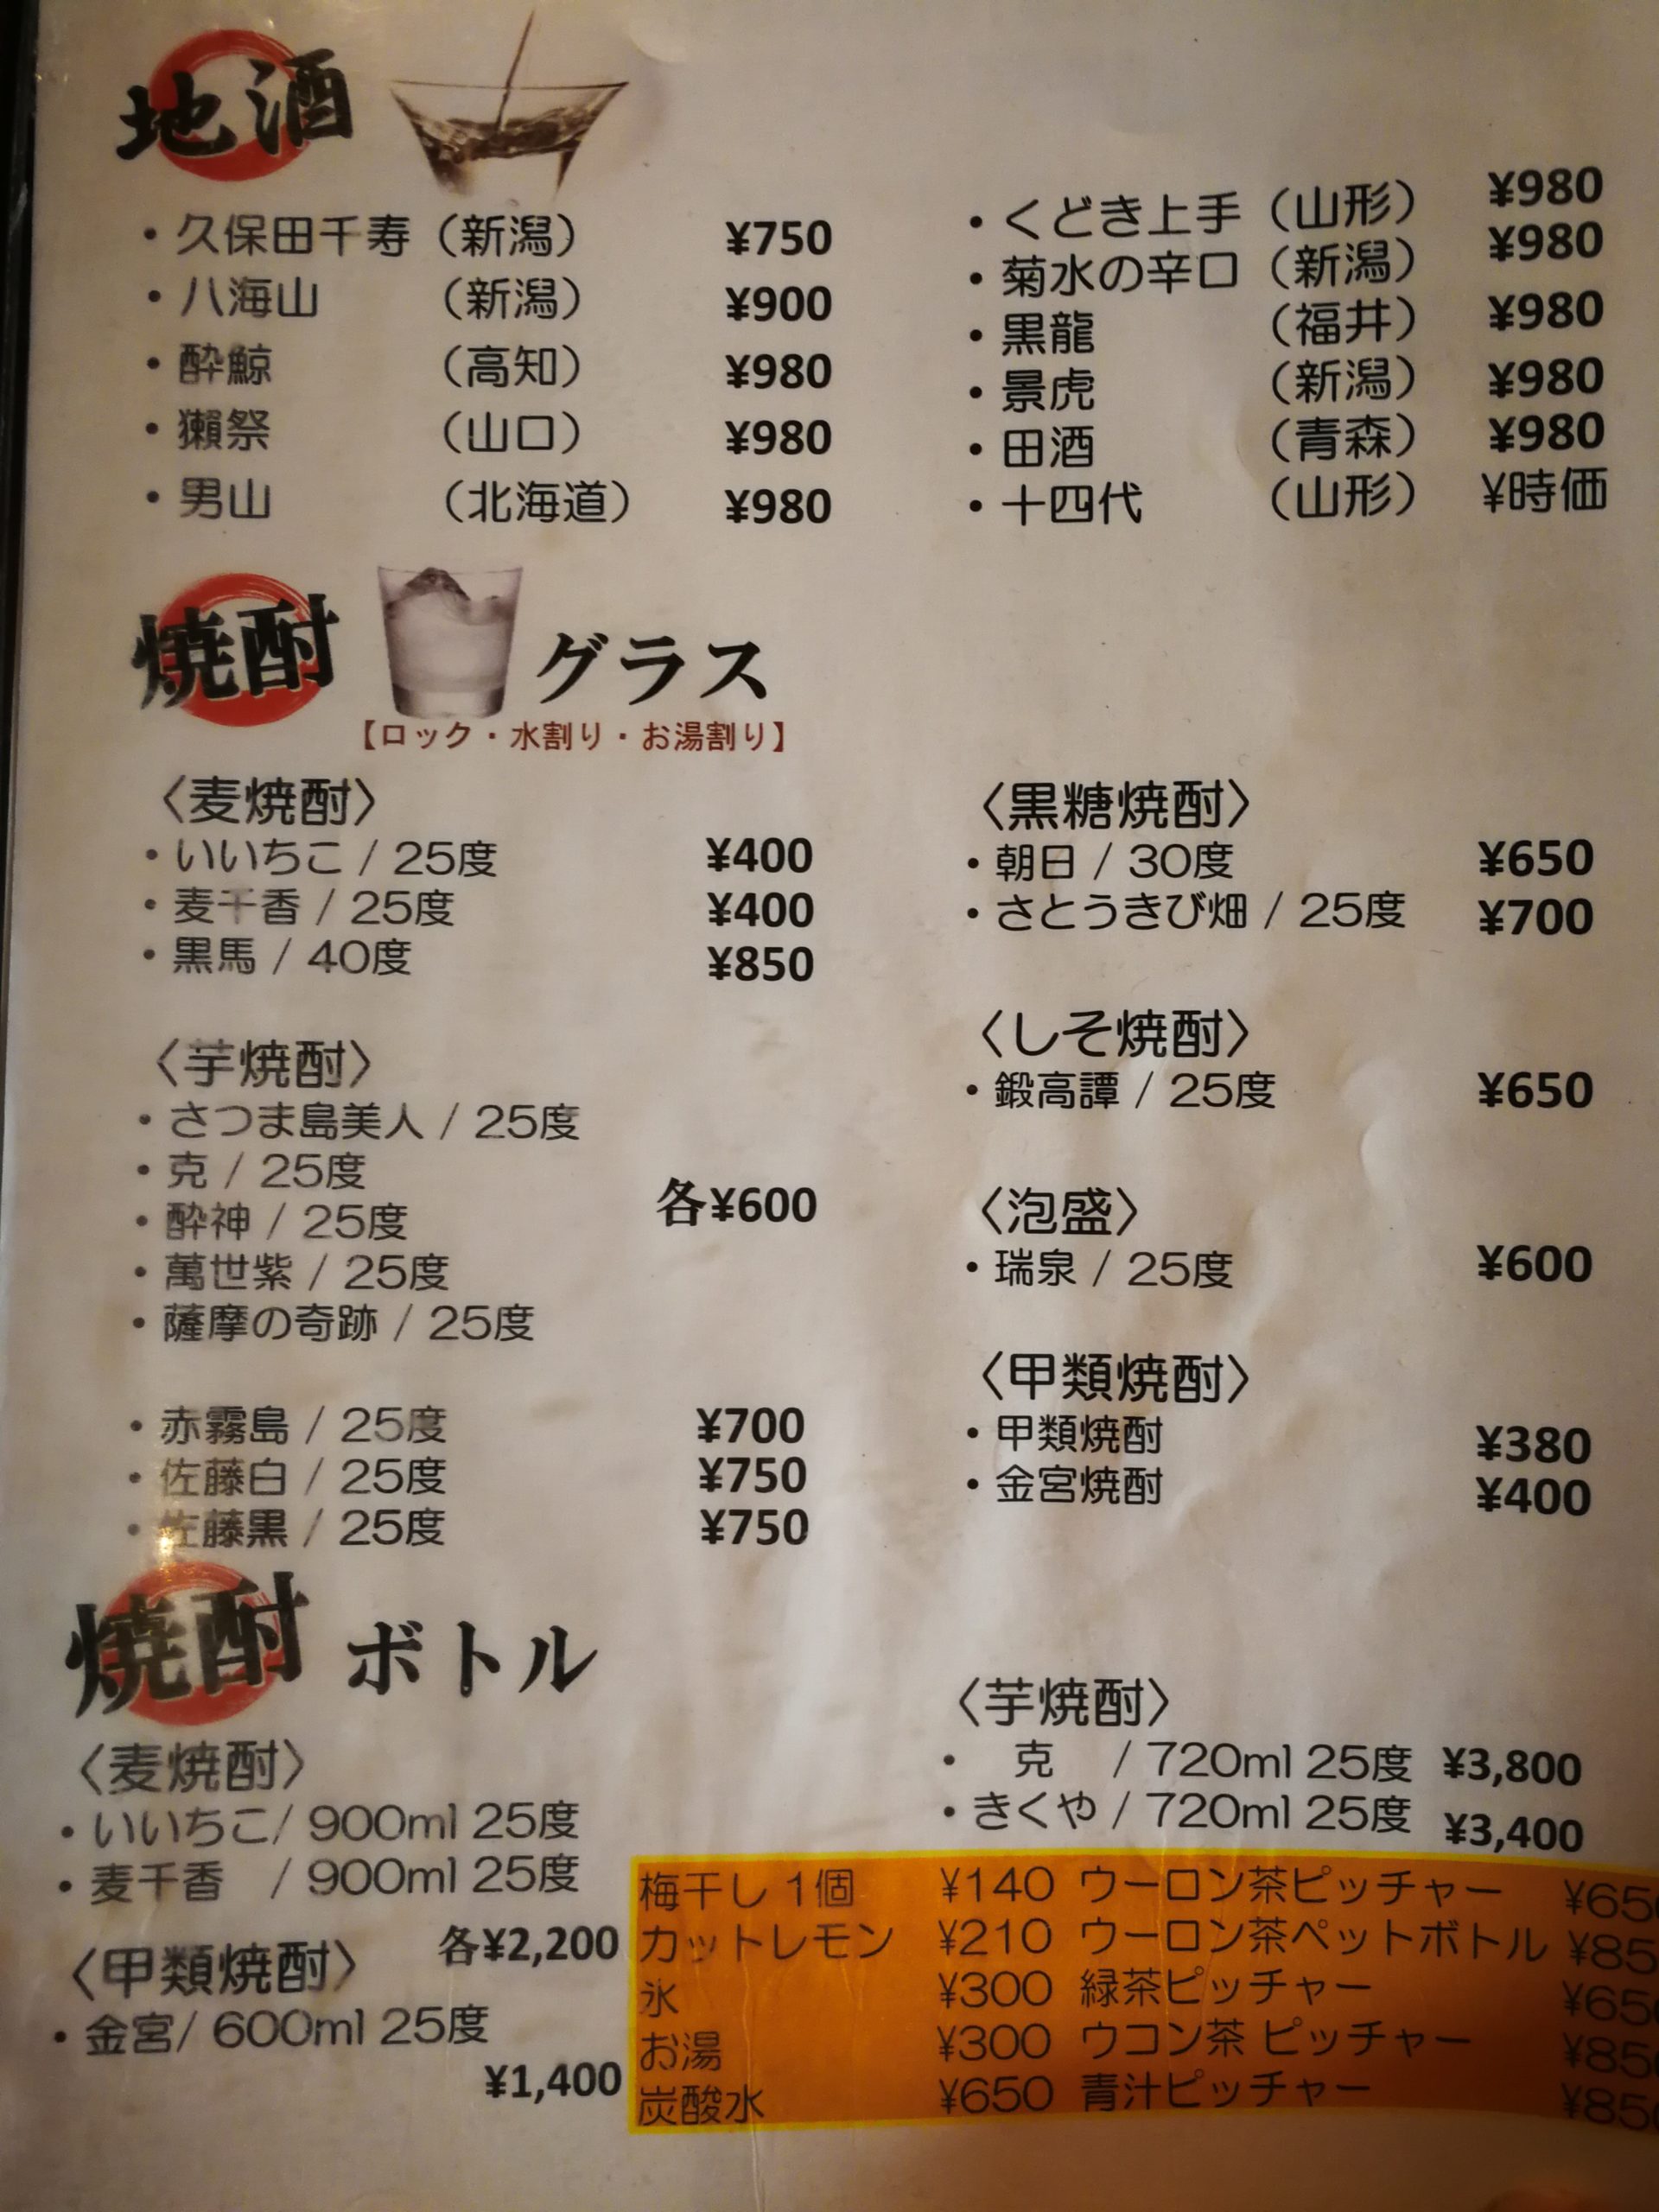 kikuya-sengawa-menu-03